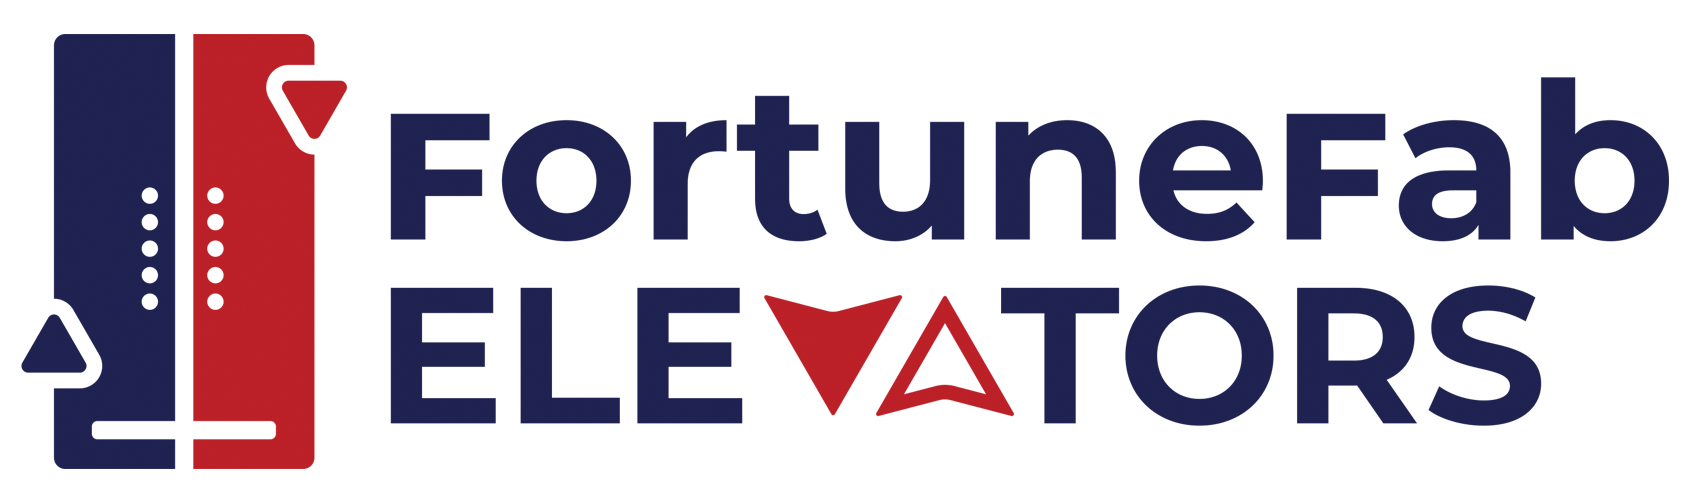 Fortunefab Elevators Logo